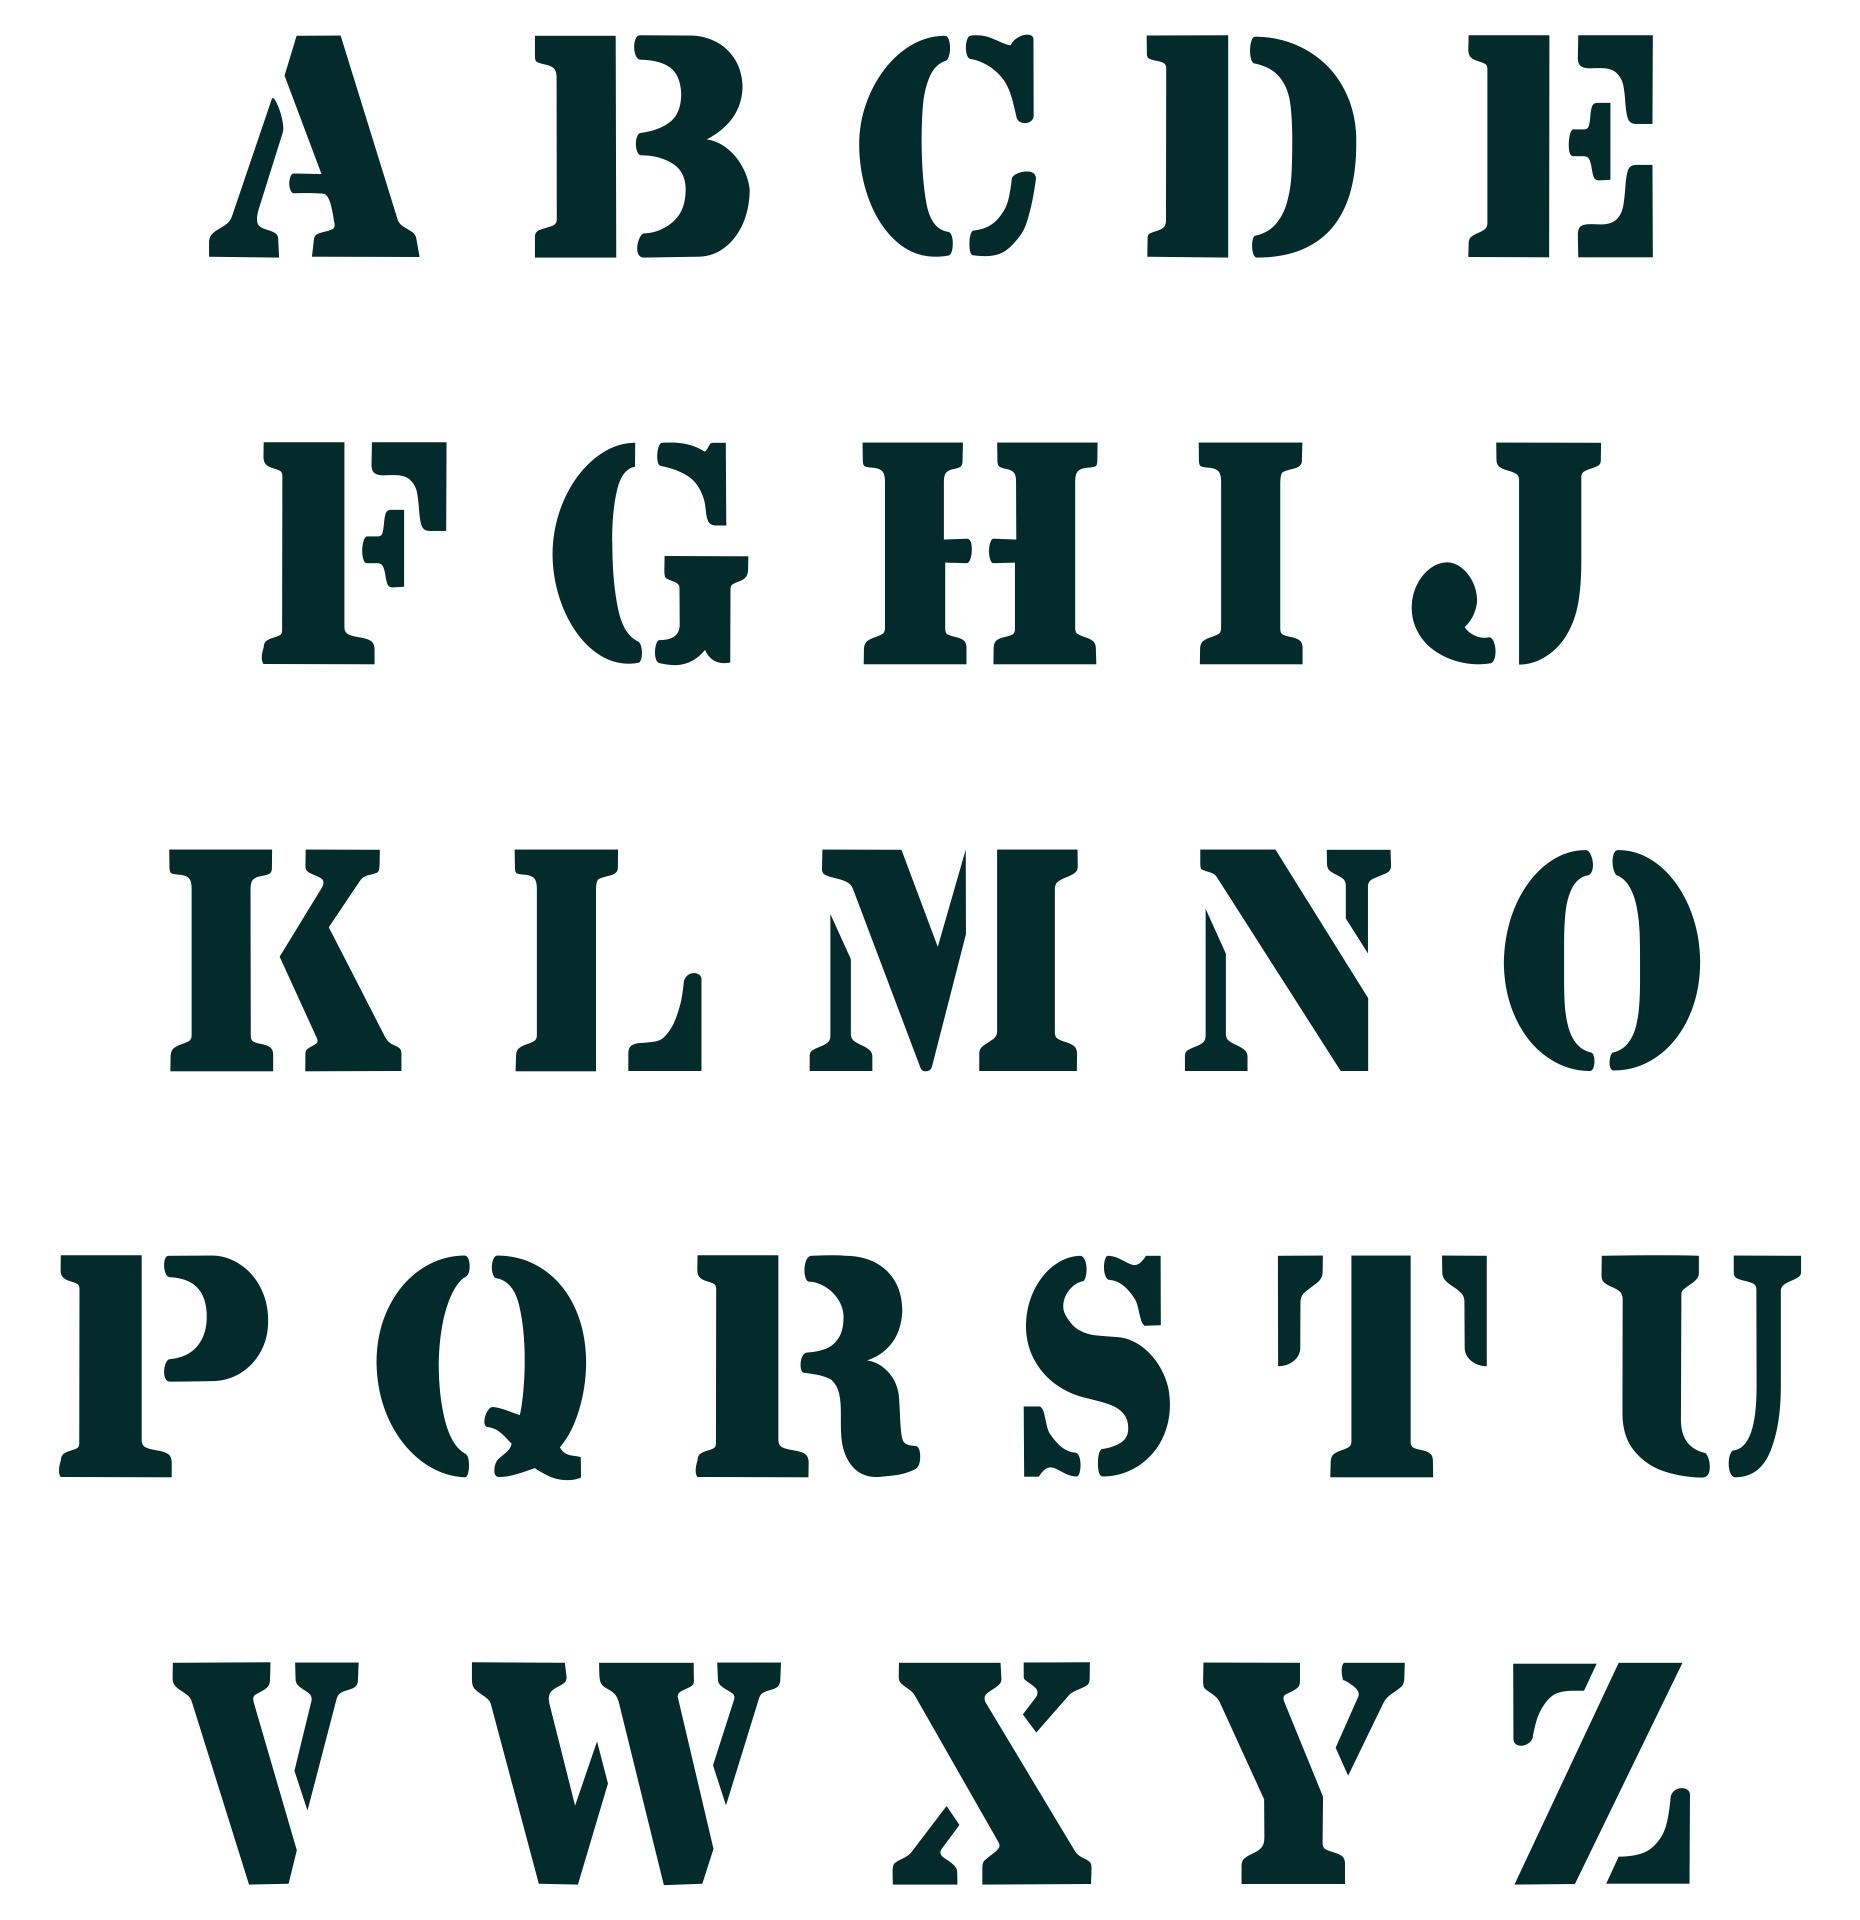 5 Inch Letters A-Z - 10 Free Pdf Printables | Printablee - Free Printable 5 Inch Letter Stencils